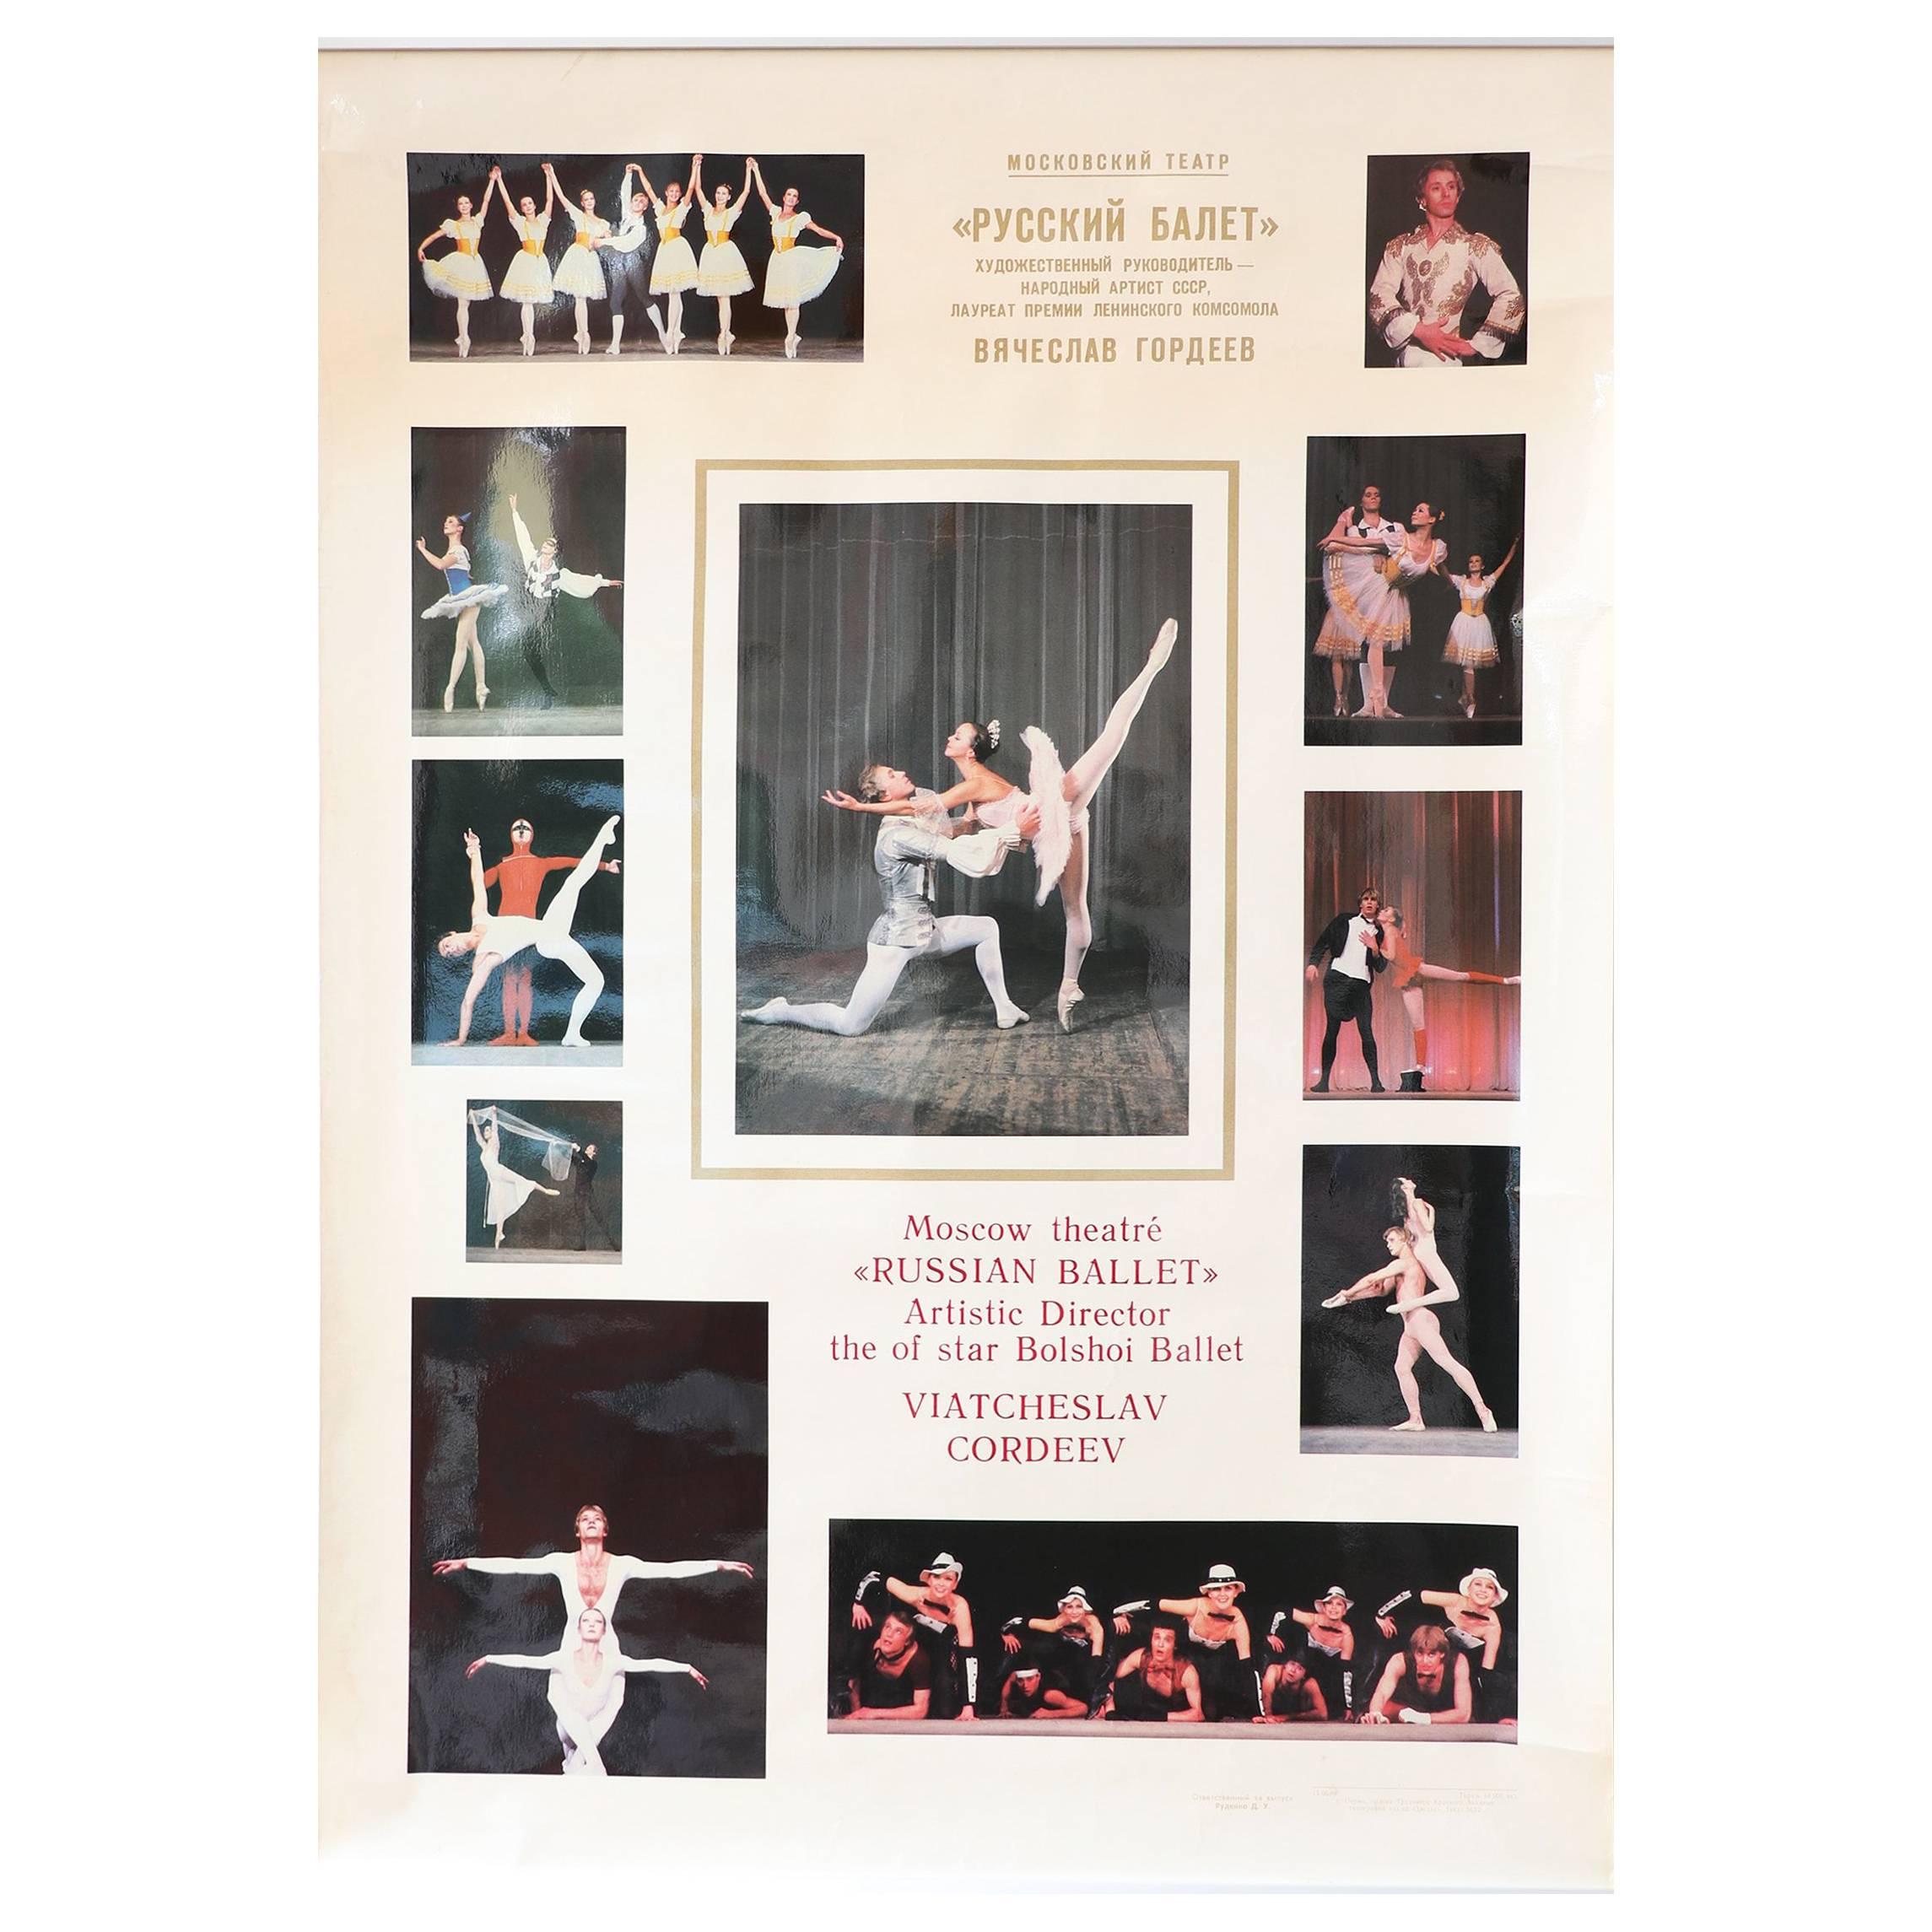 Vintage Russian Ballet High Glossy Soviet-Era Poster, 1980s Bolshoi / Gordeev